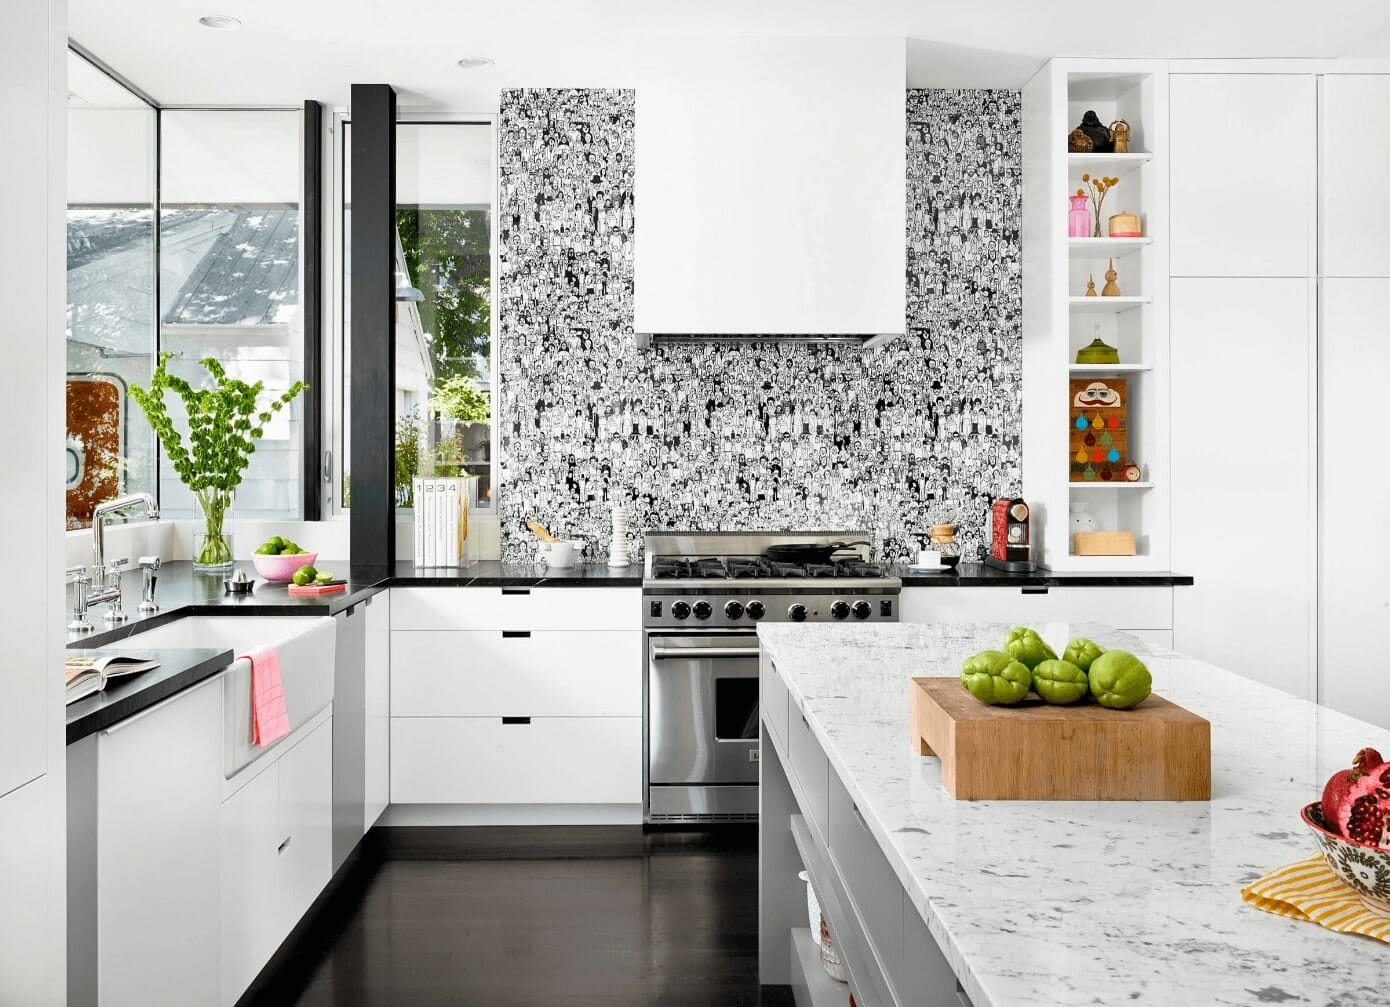 Modern Kitchen Wallpaper